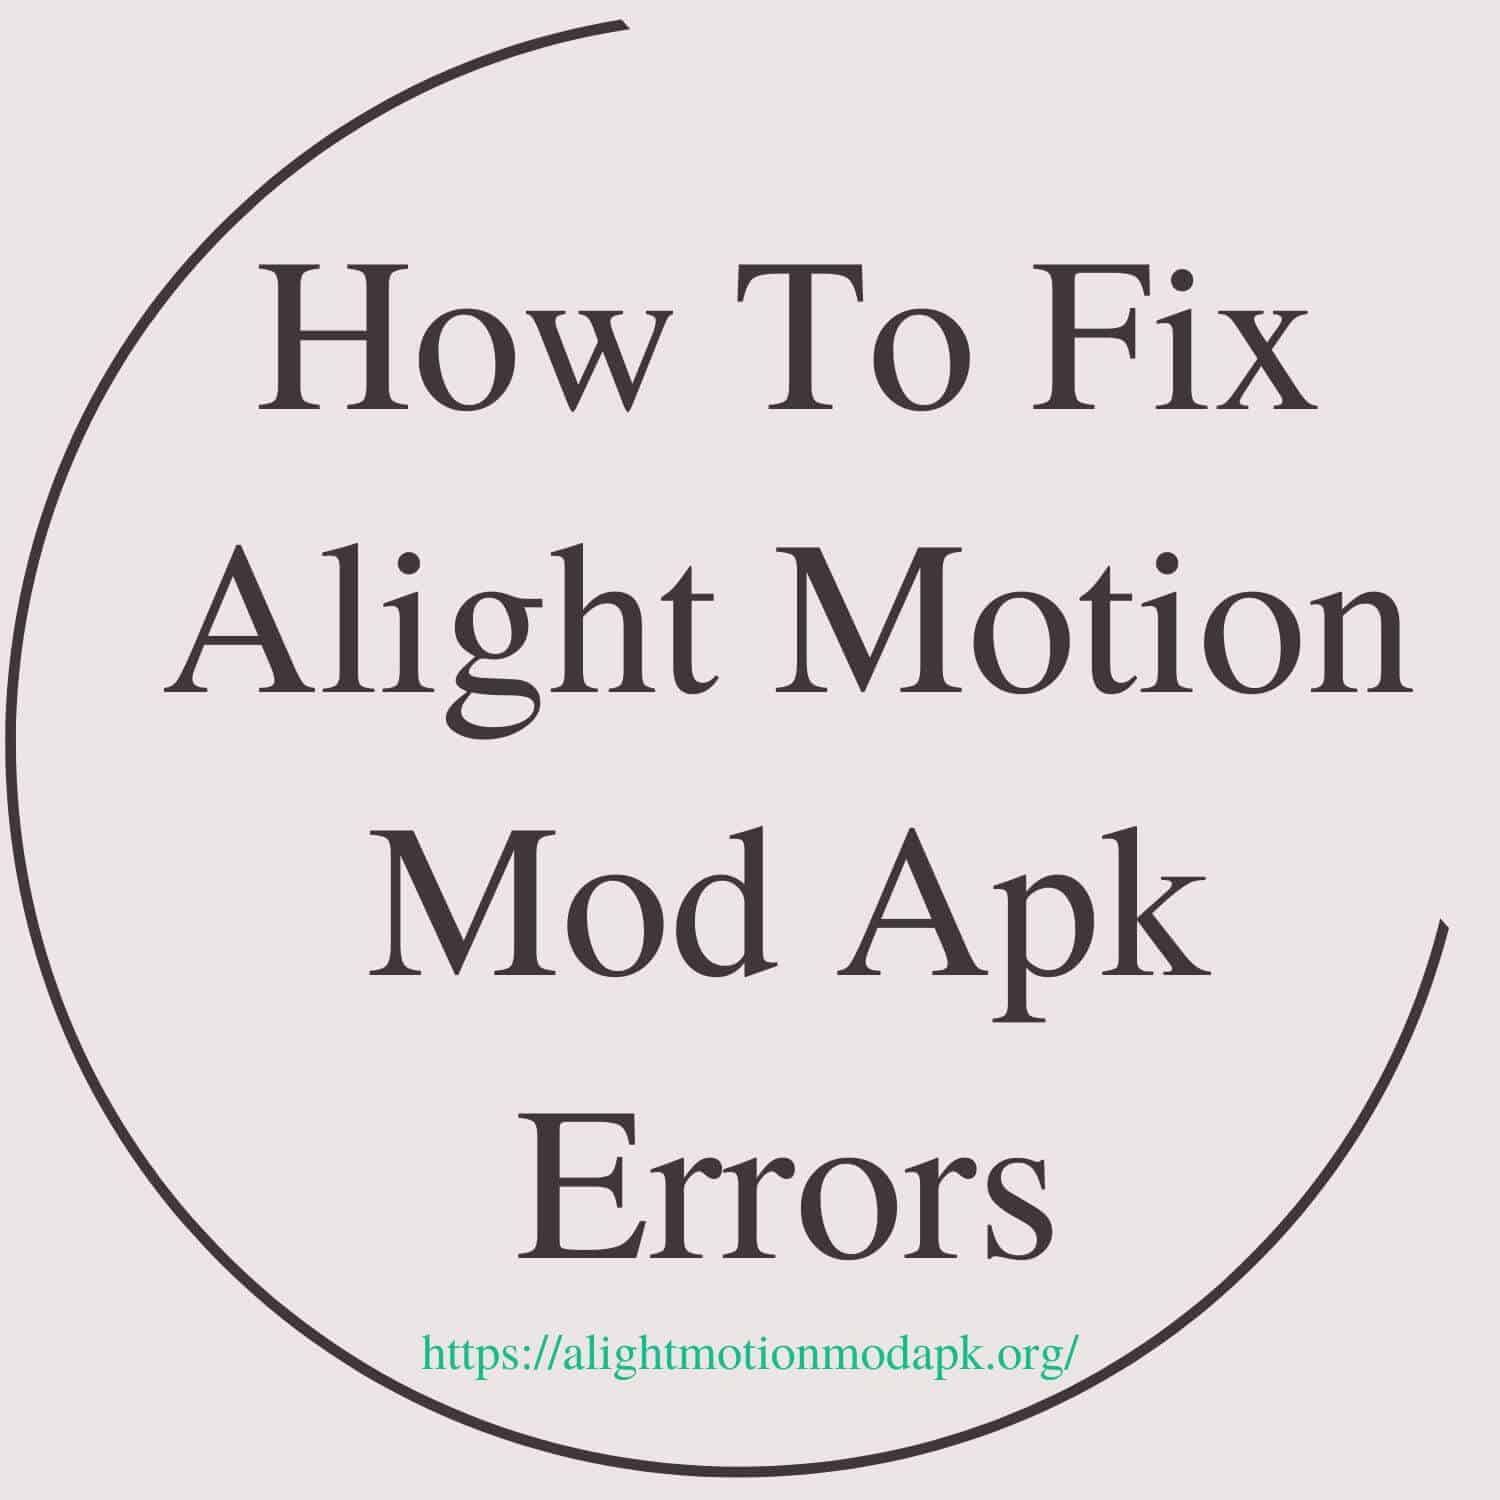 How To Fix Alight Motion Mod Apk Errors